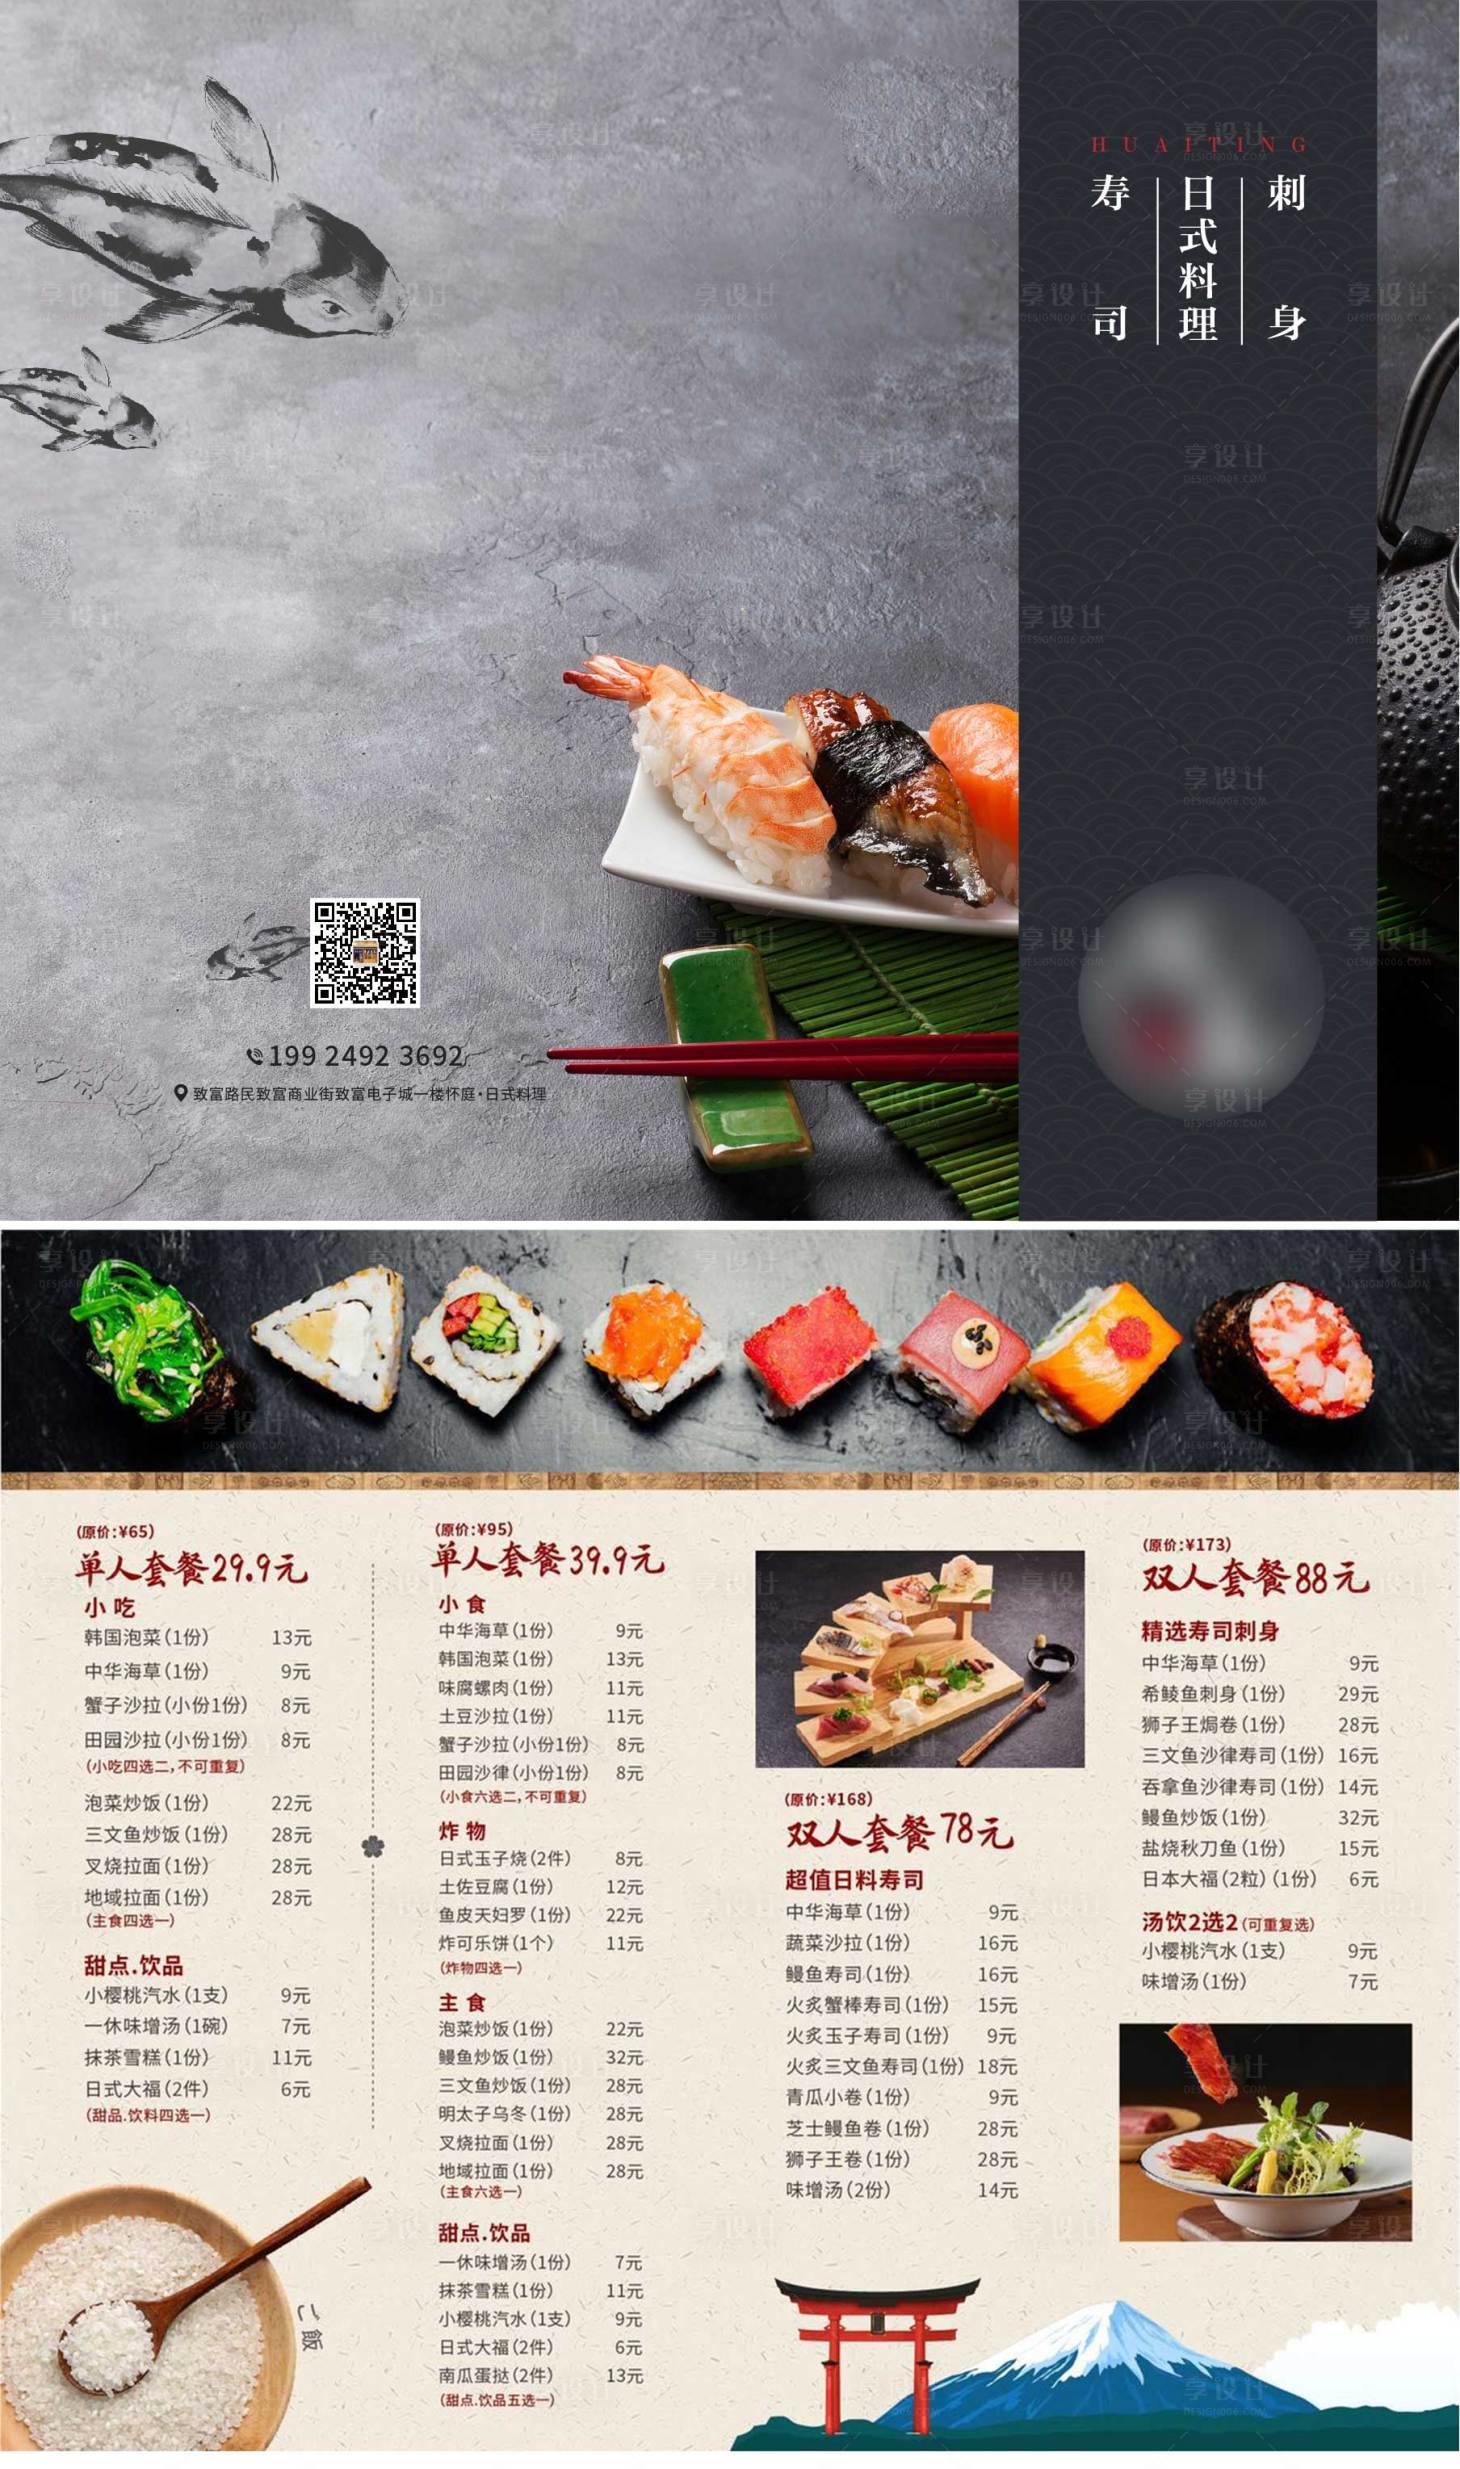 Japanese Cuisine Menu Design 日式料理菜單設計 | Behance